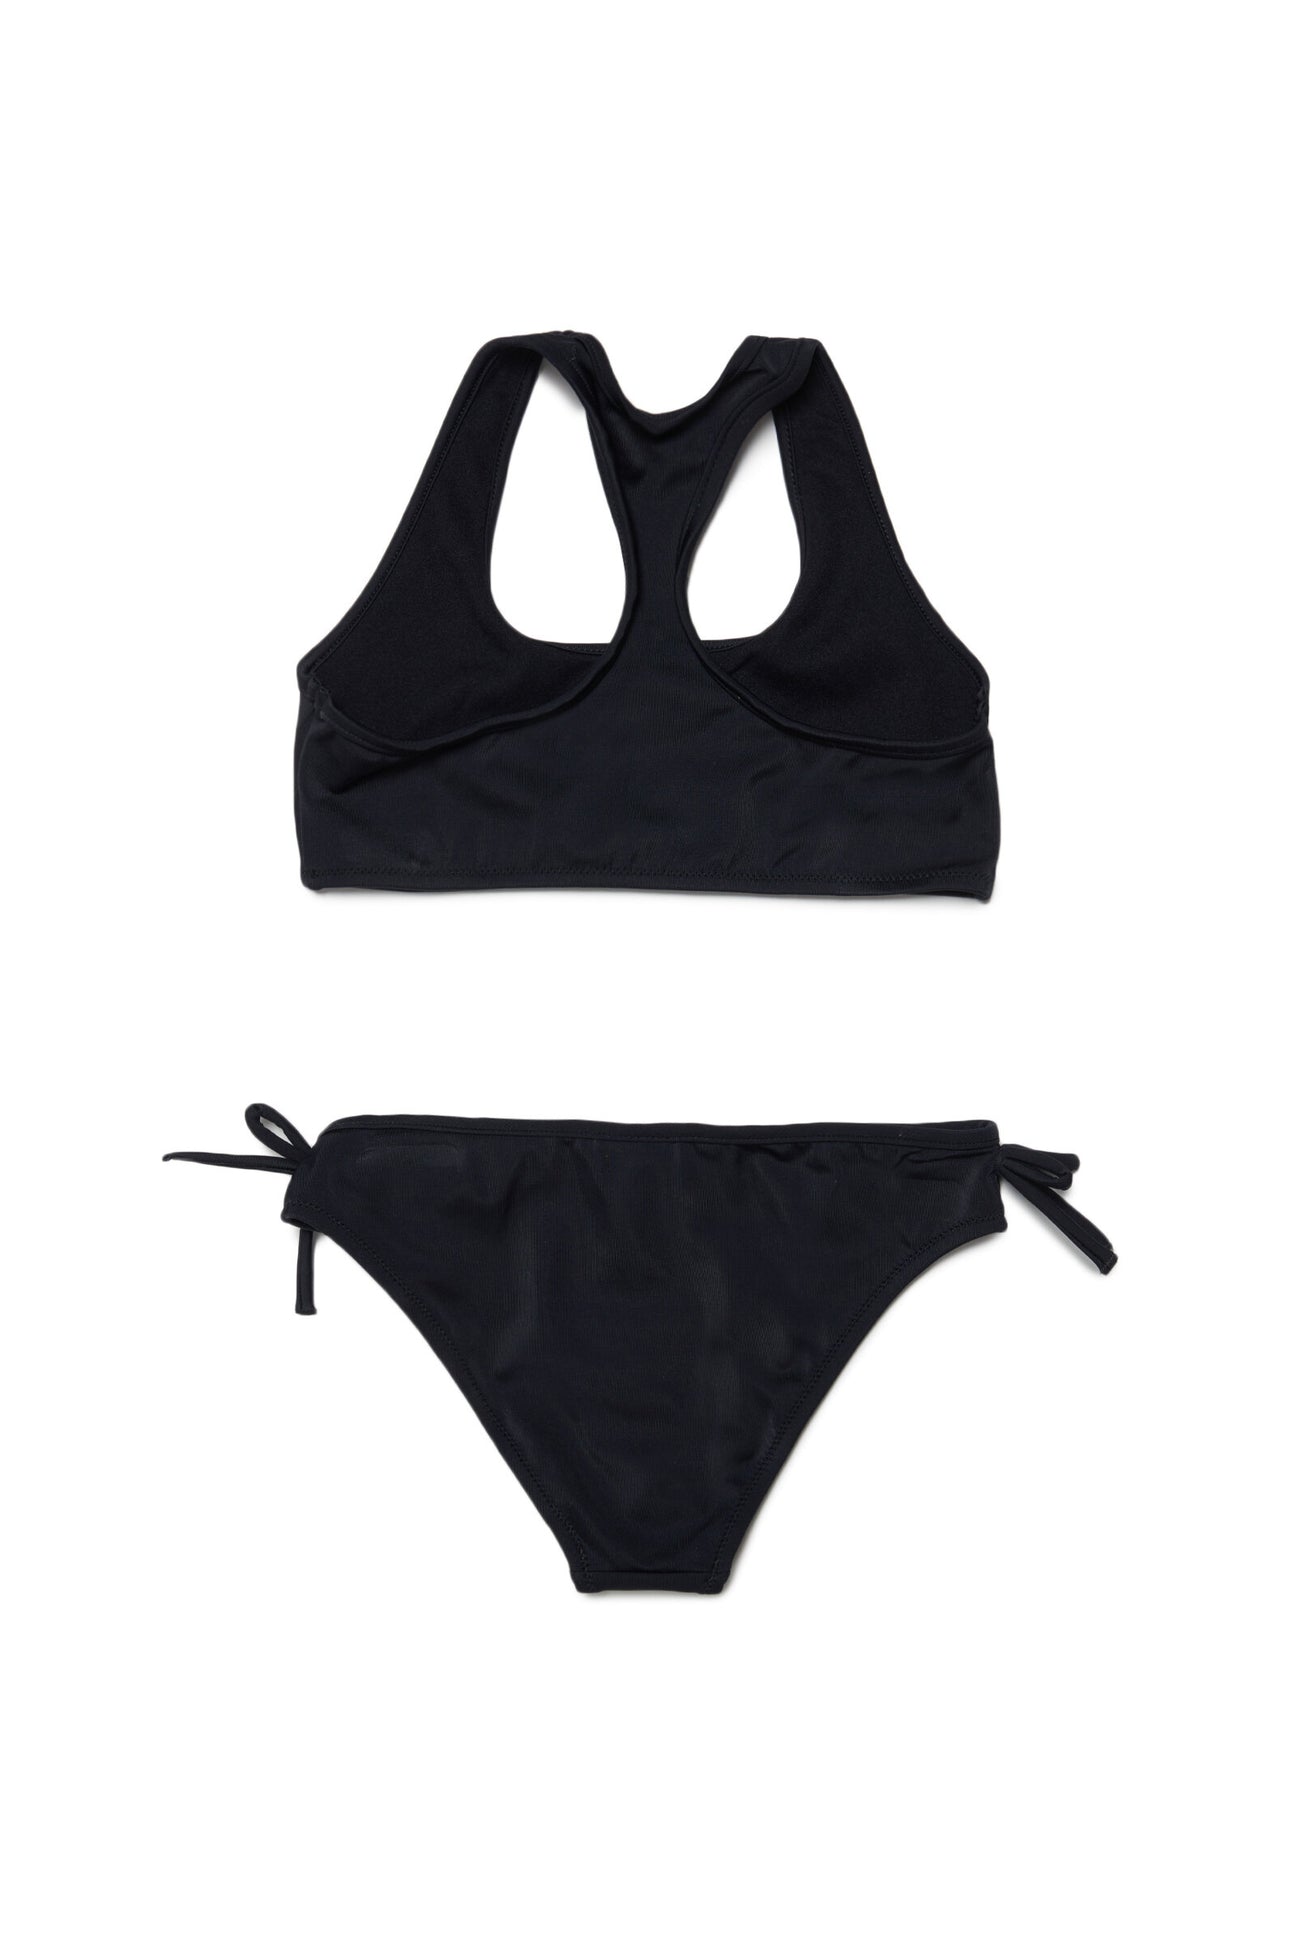 Black lycra bikini swimming costume with logo Black lycra bikini swimming costume with logo